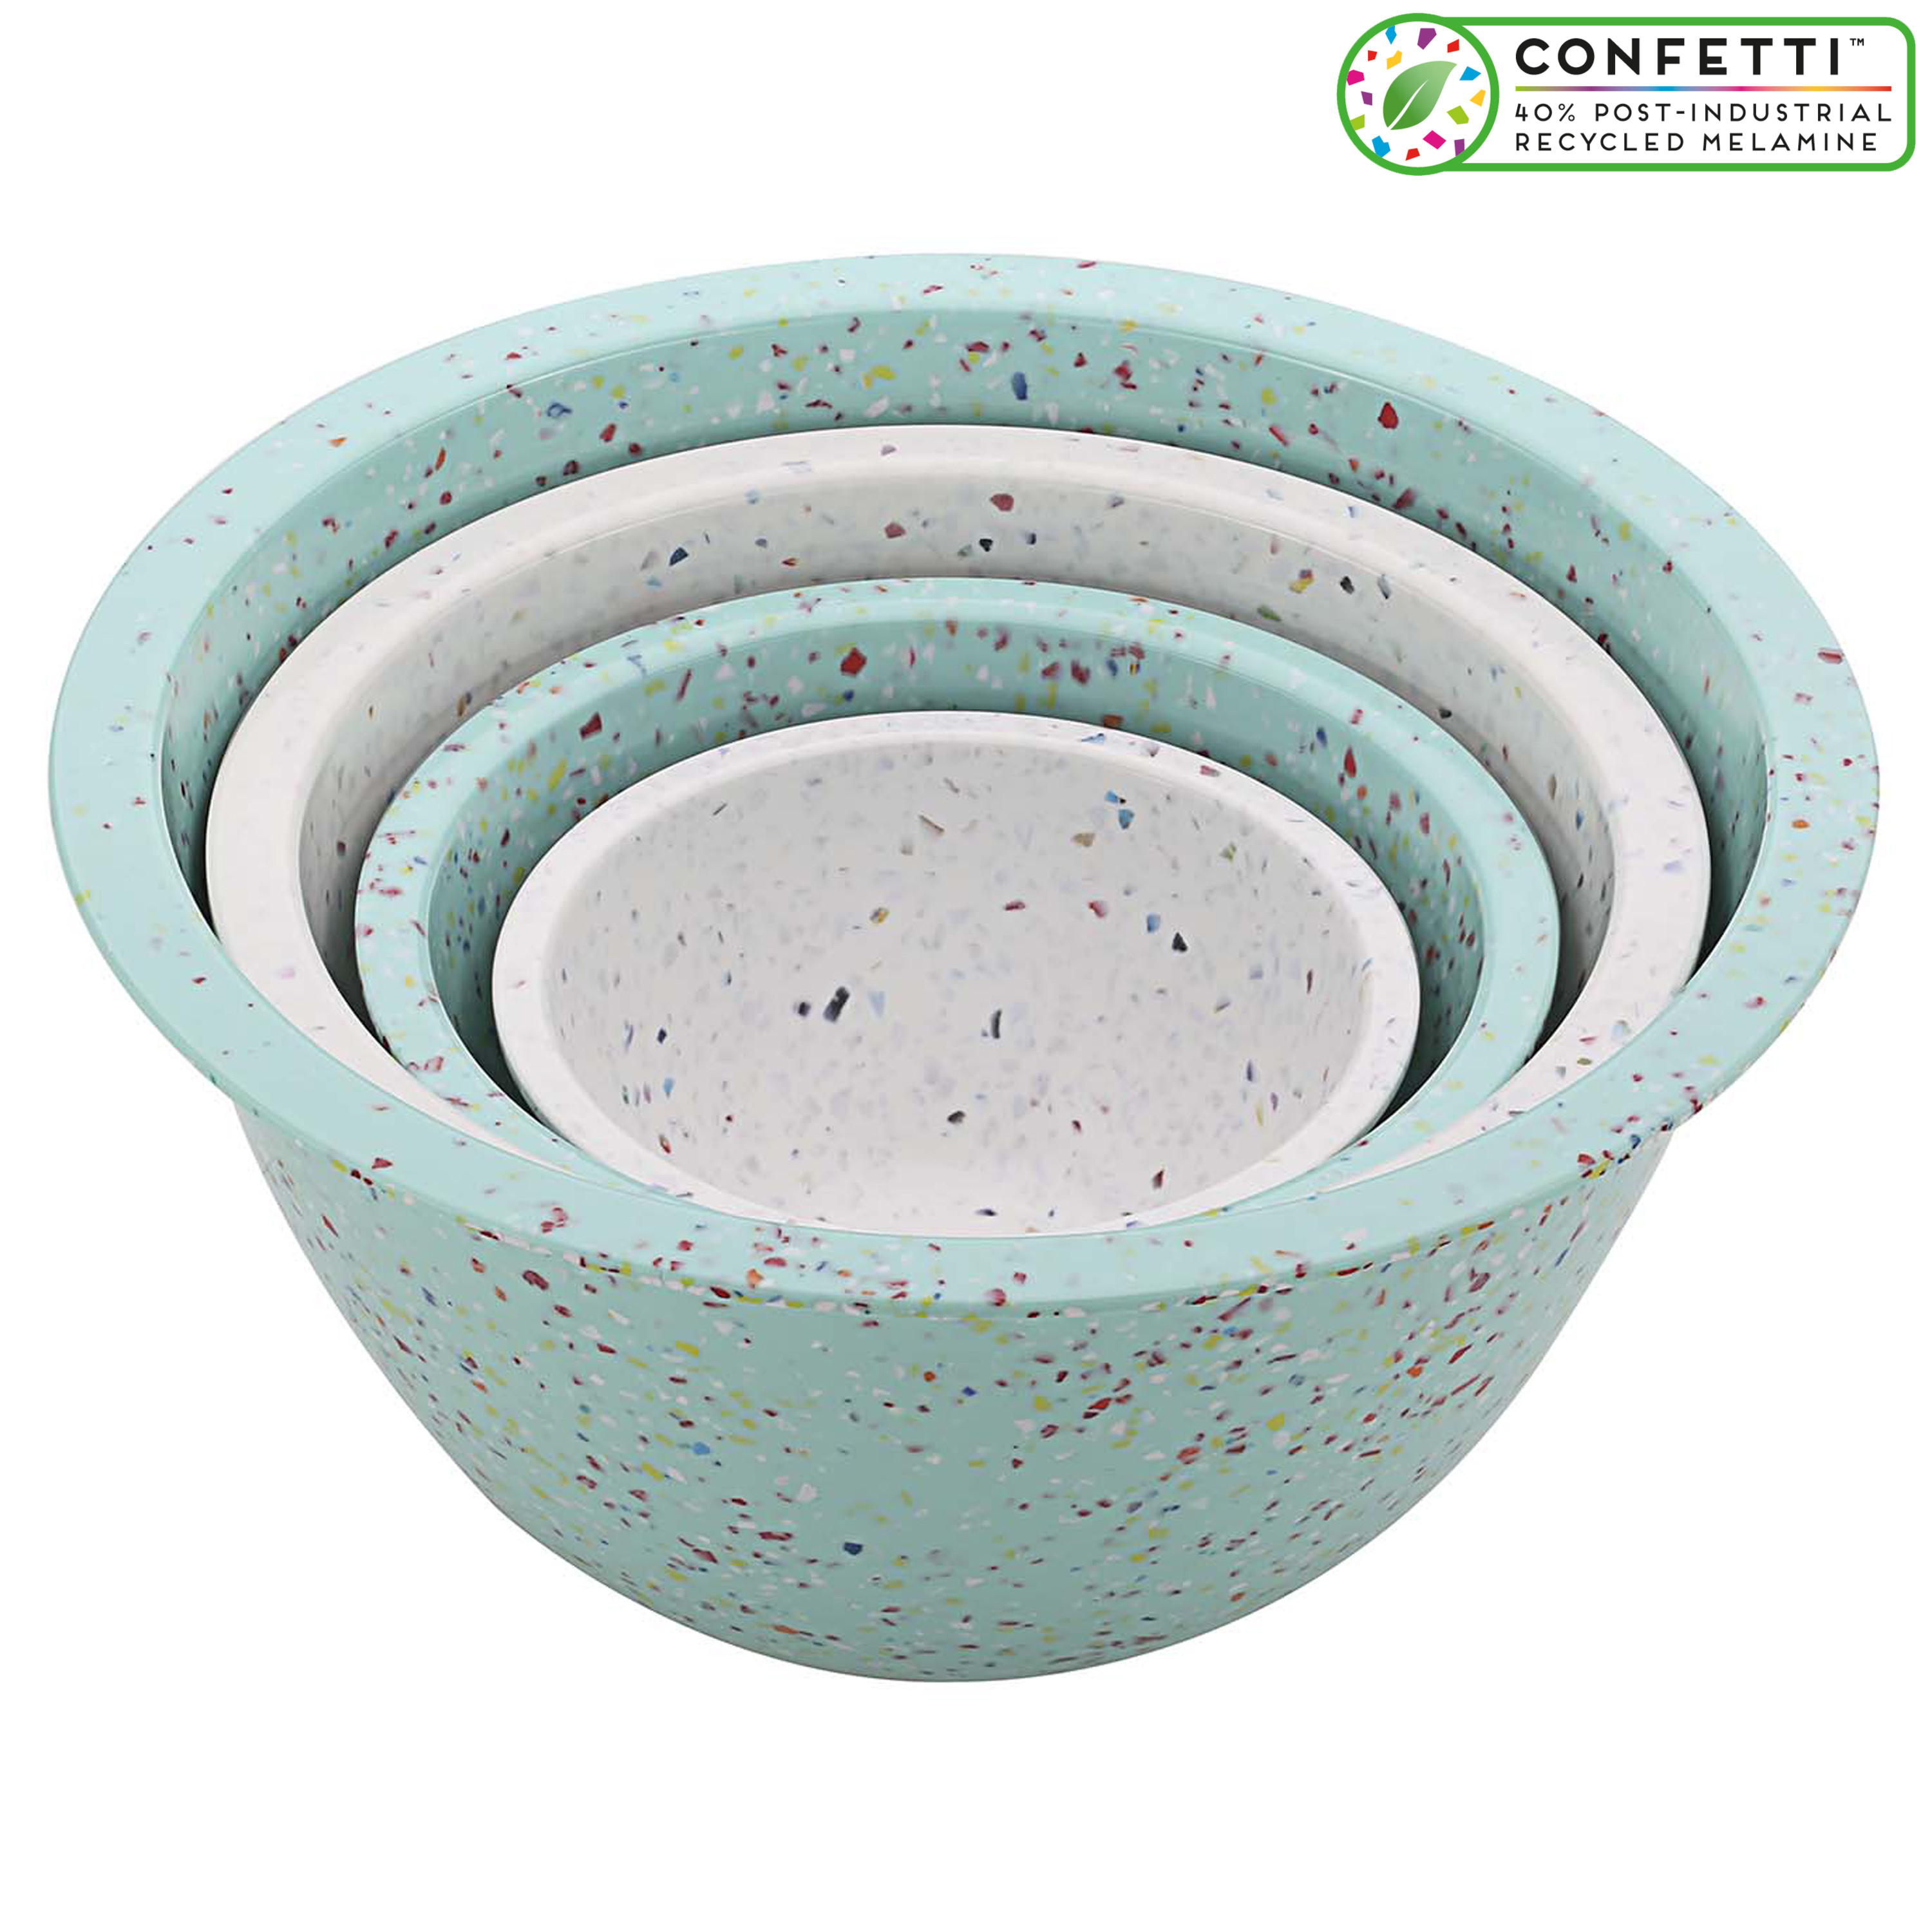 Confetti Mixing Bowl Set, Mint & White, 4-piece set slideshow image 1